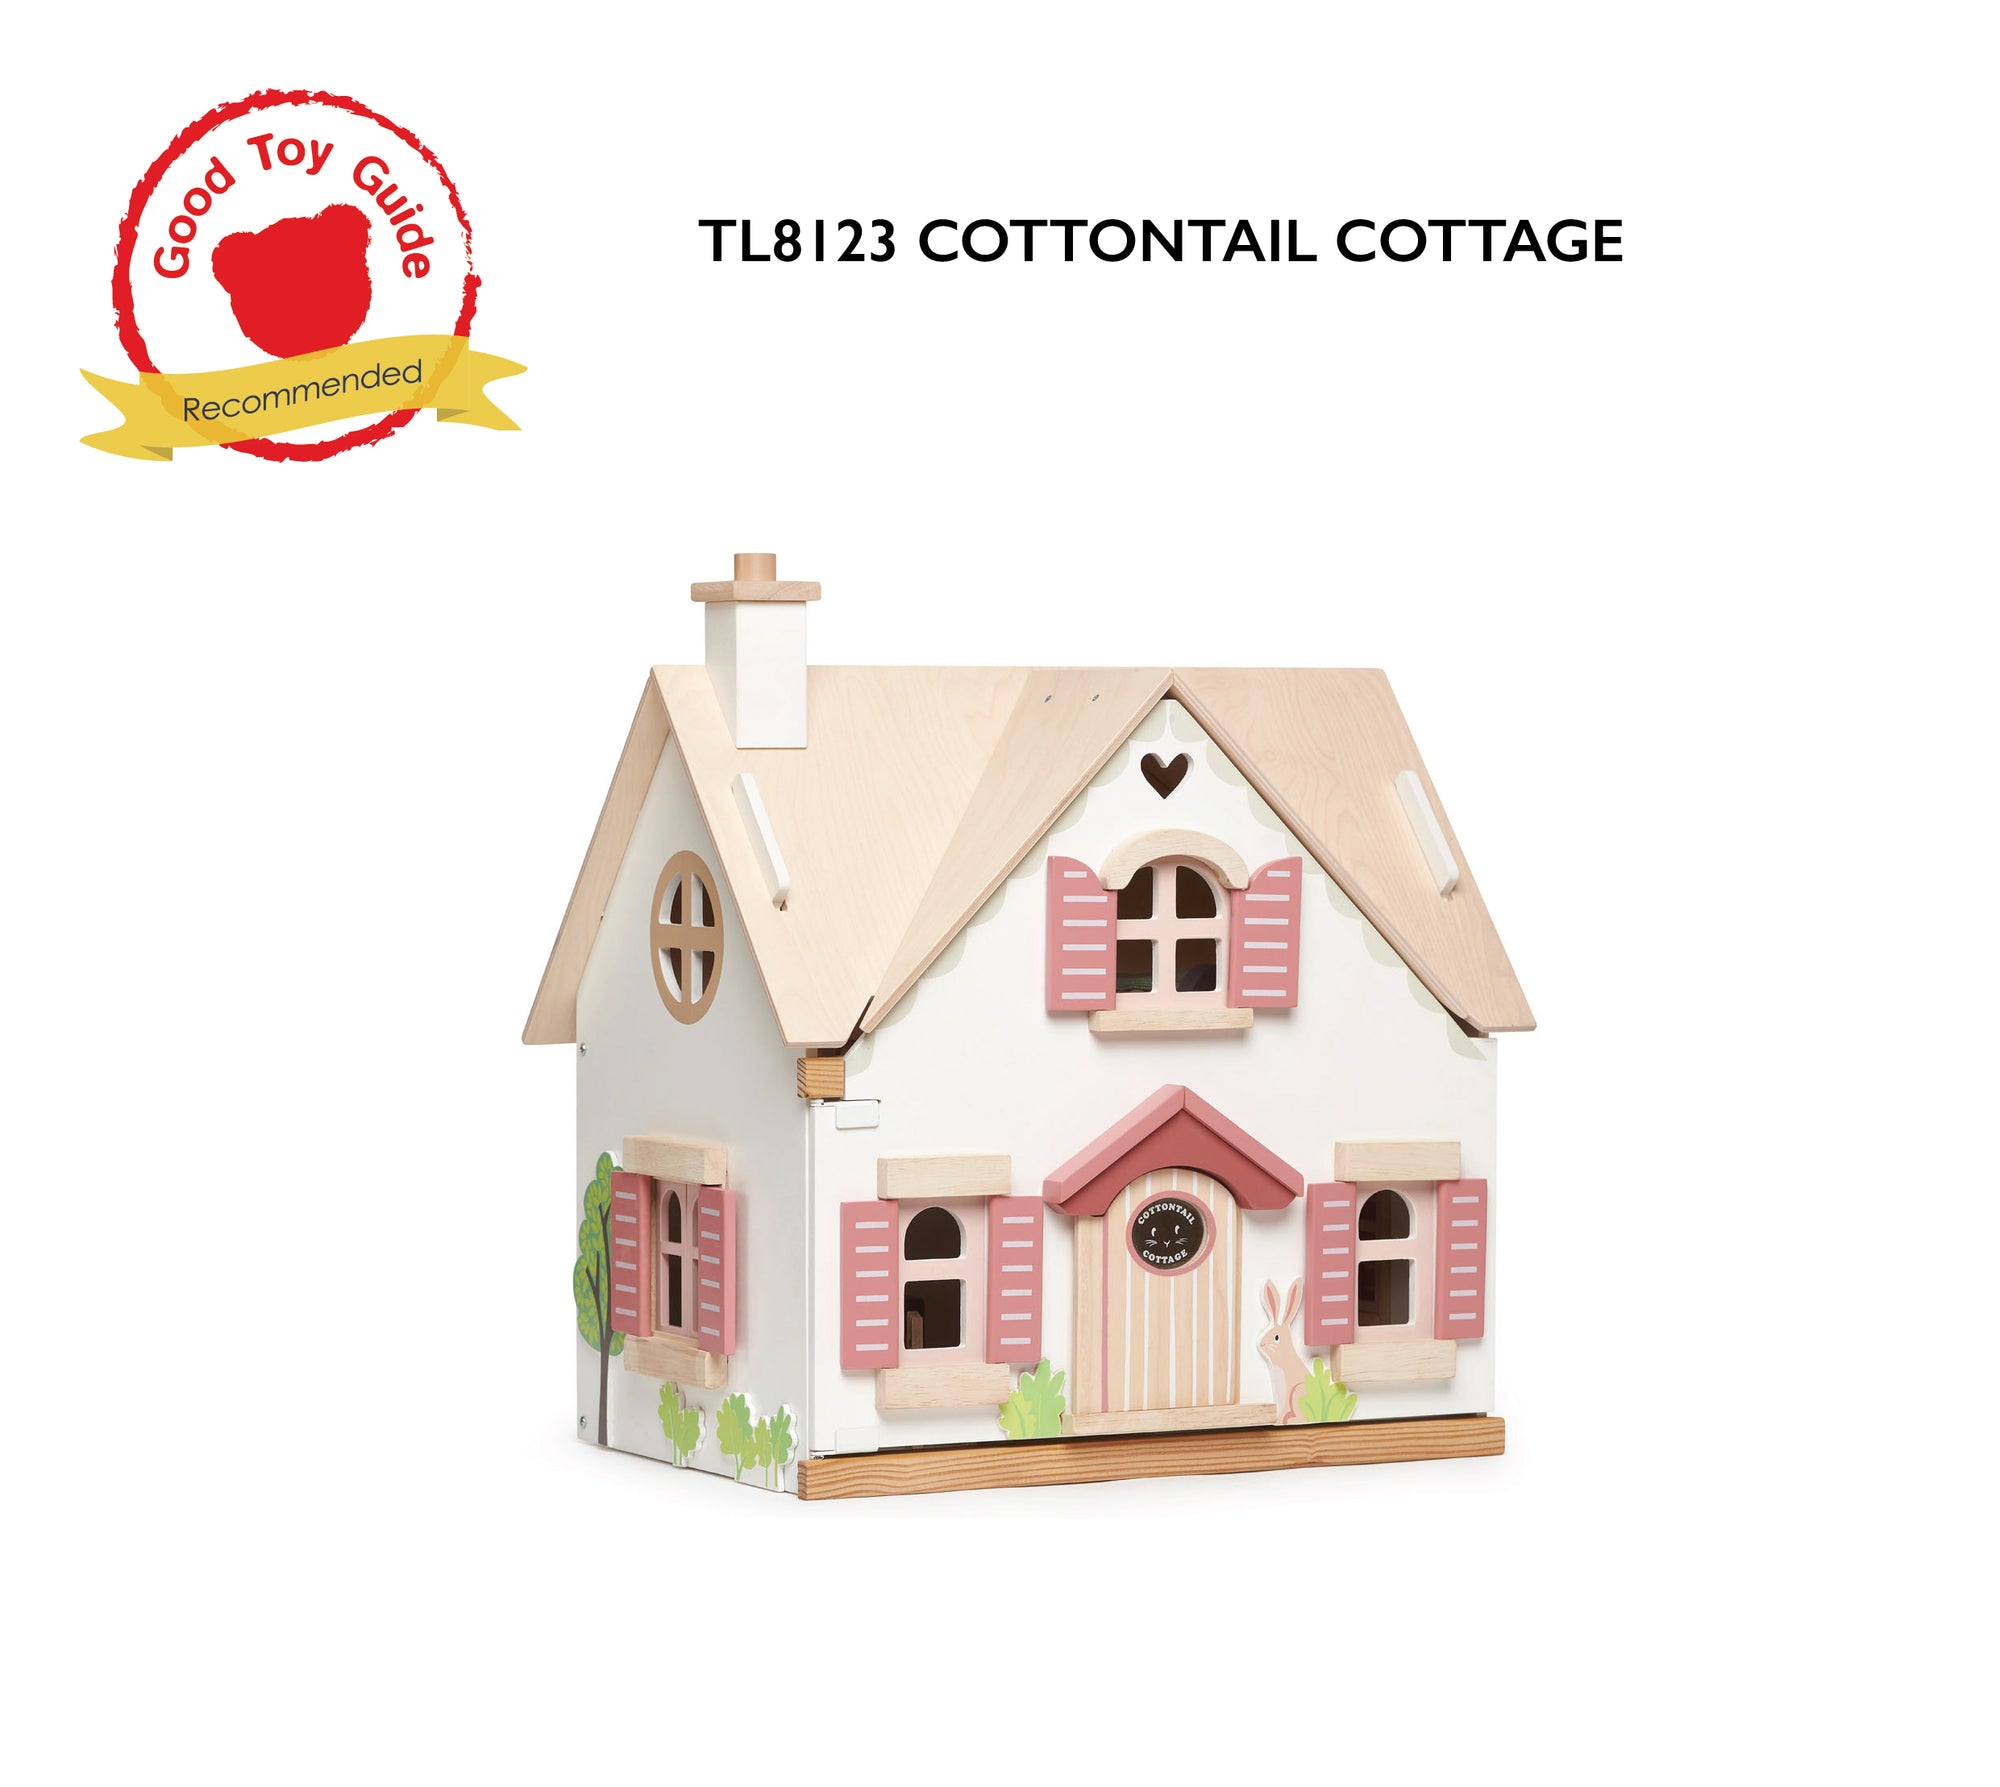 Cottontail Cottage